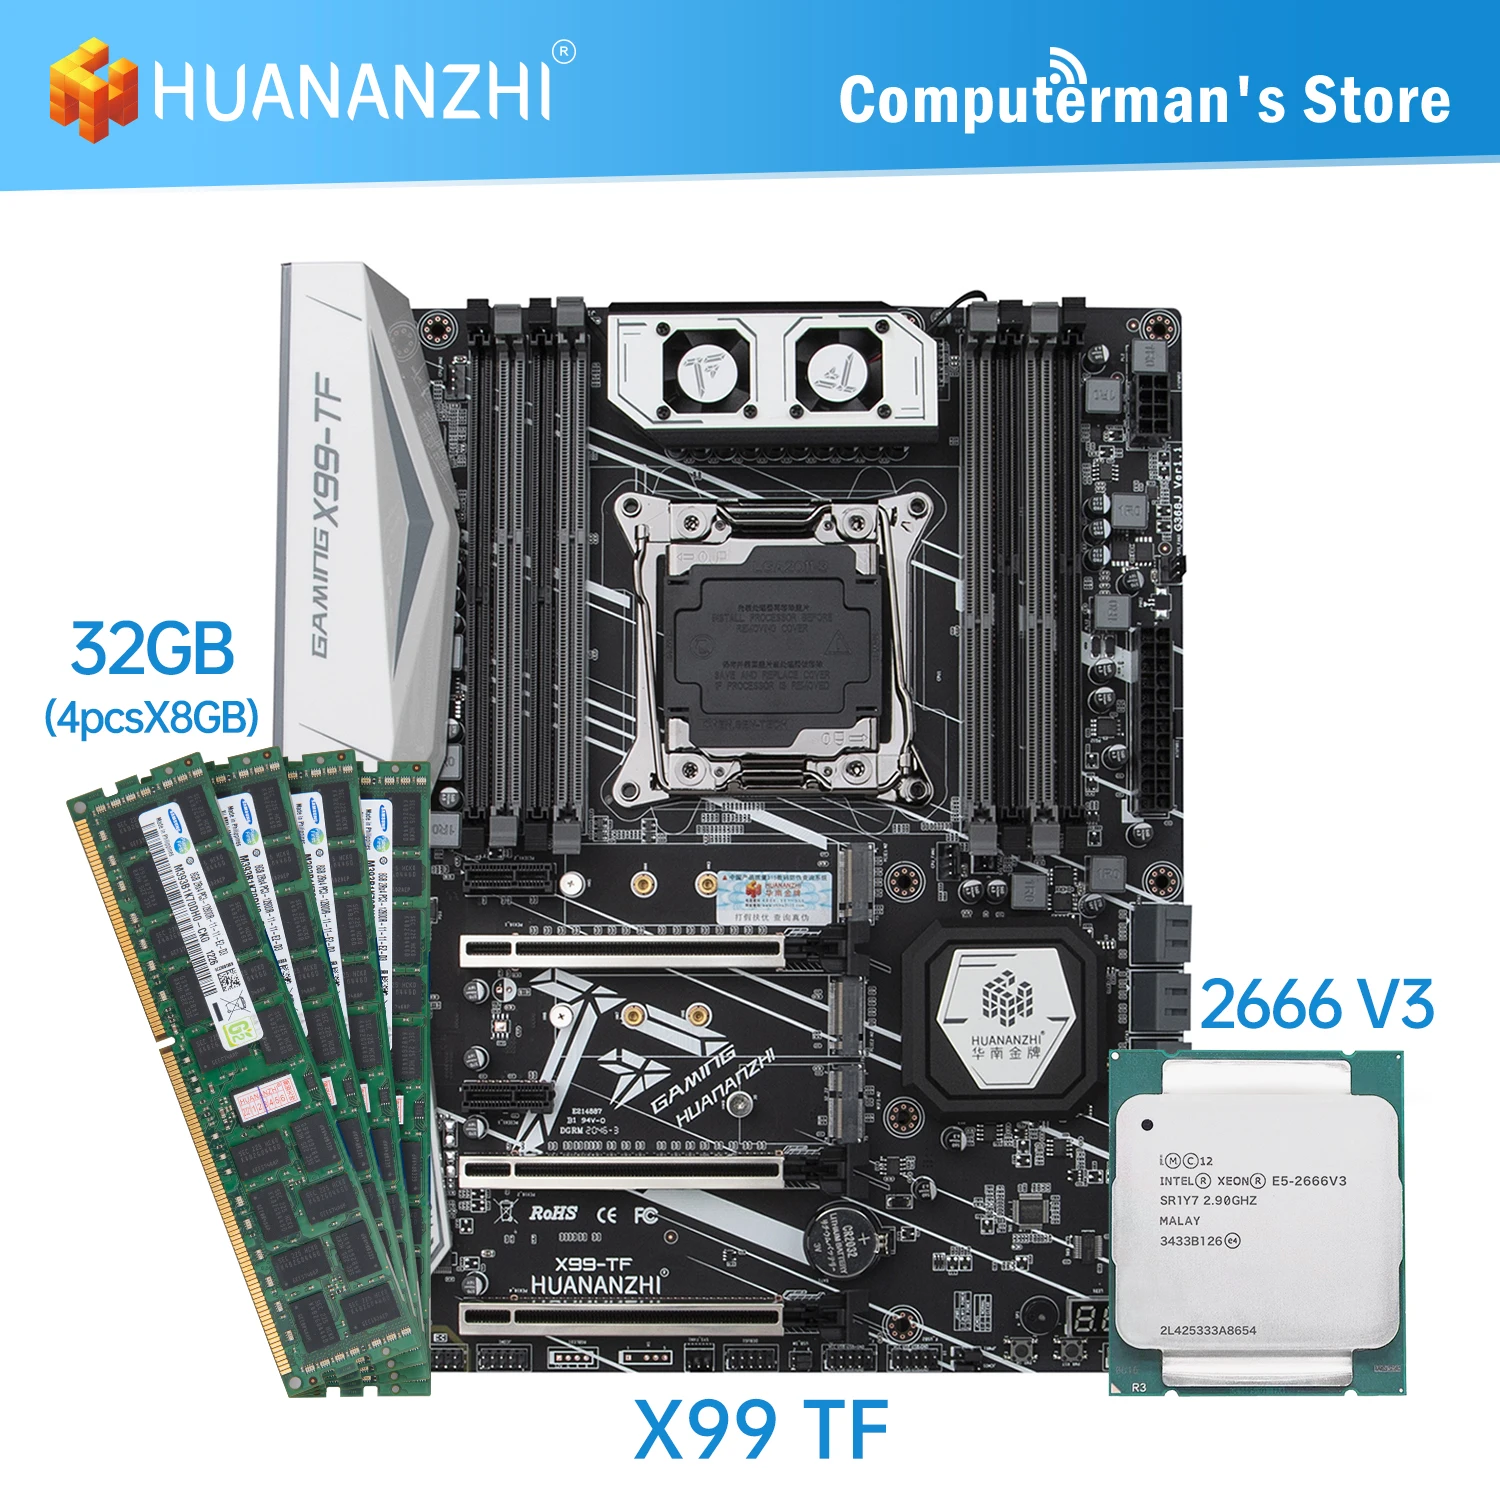 HUANANZHI-kit combinado de placa base X99 TF, CPU Intel XEON E5 2666 V3, Memoria 4x8G DDR3 RECC 1600, Memoria M.2 NVME USB3.0 ATX